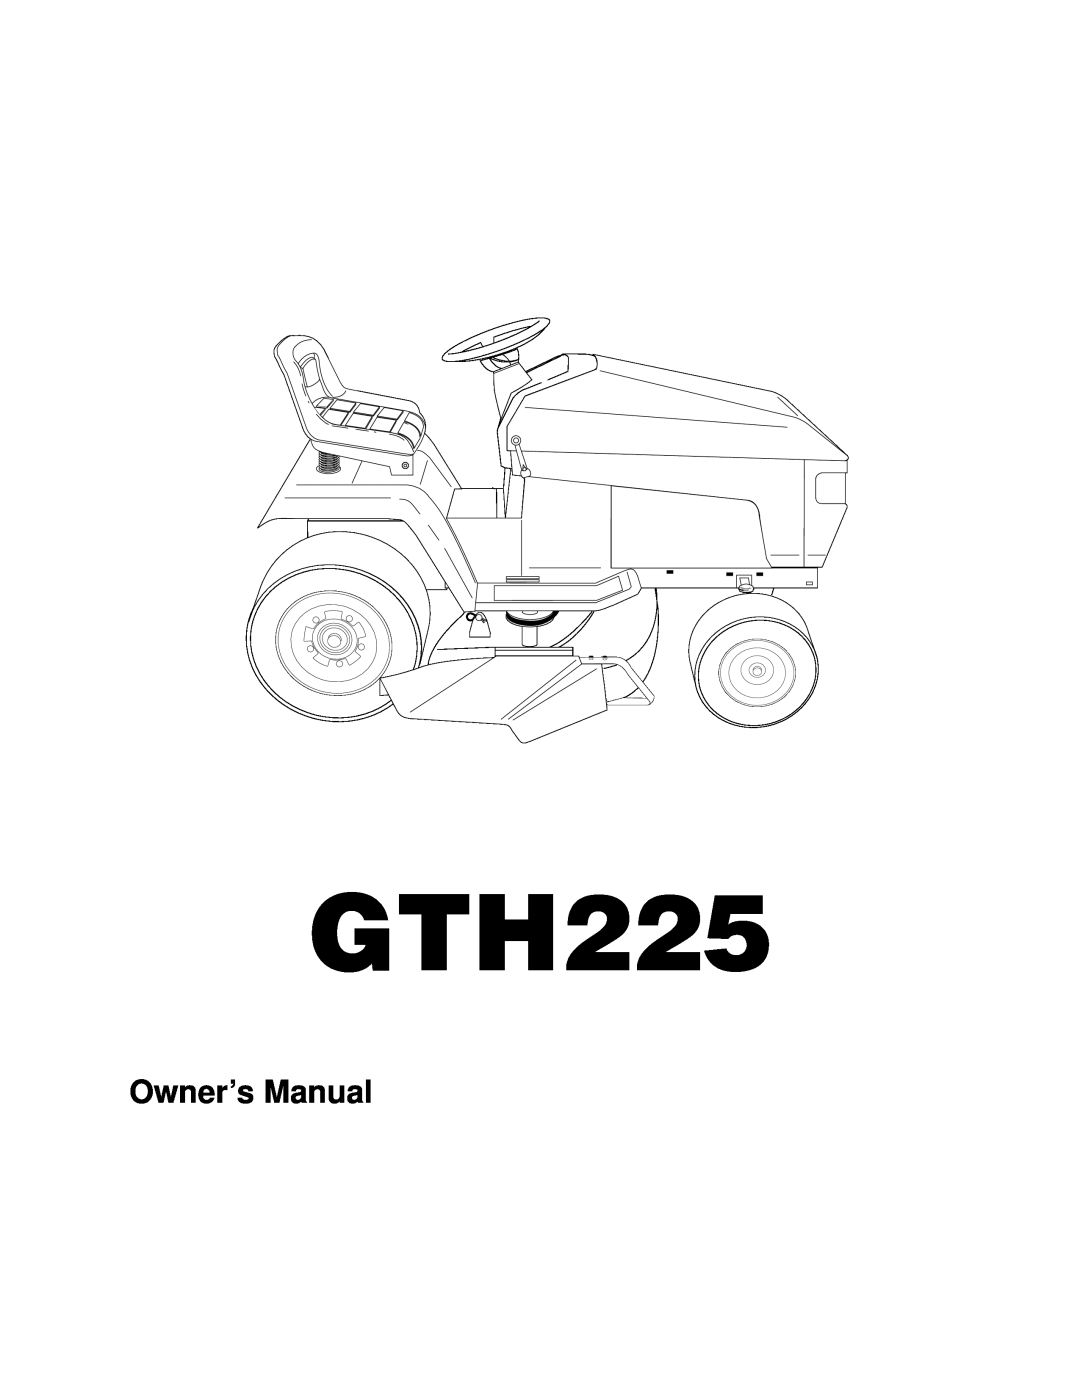 Husqvarna GTH225 owner manual Owner’s Manual 